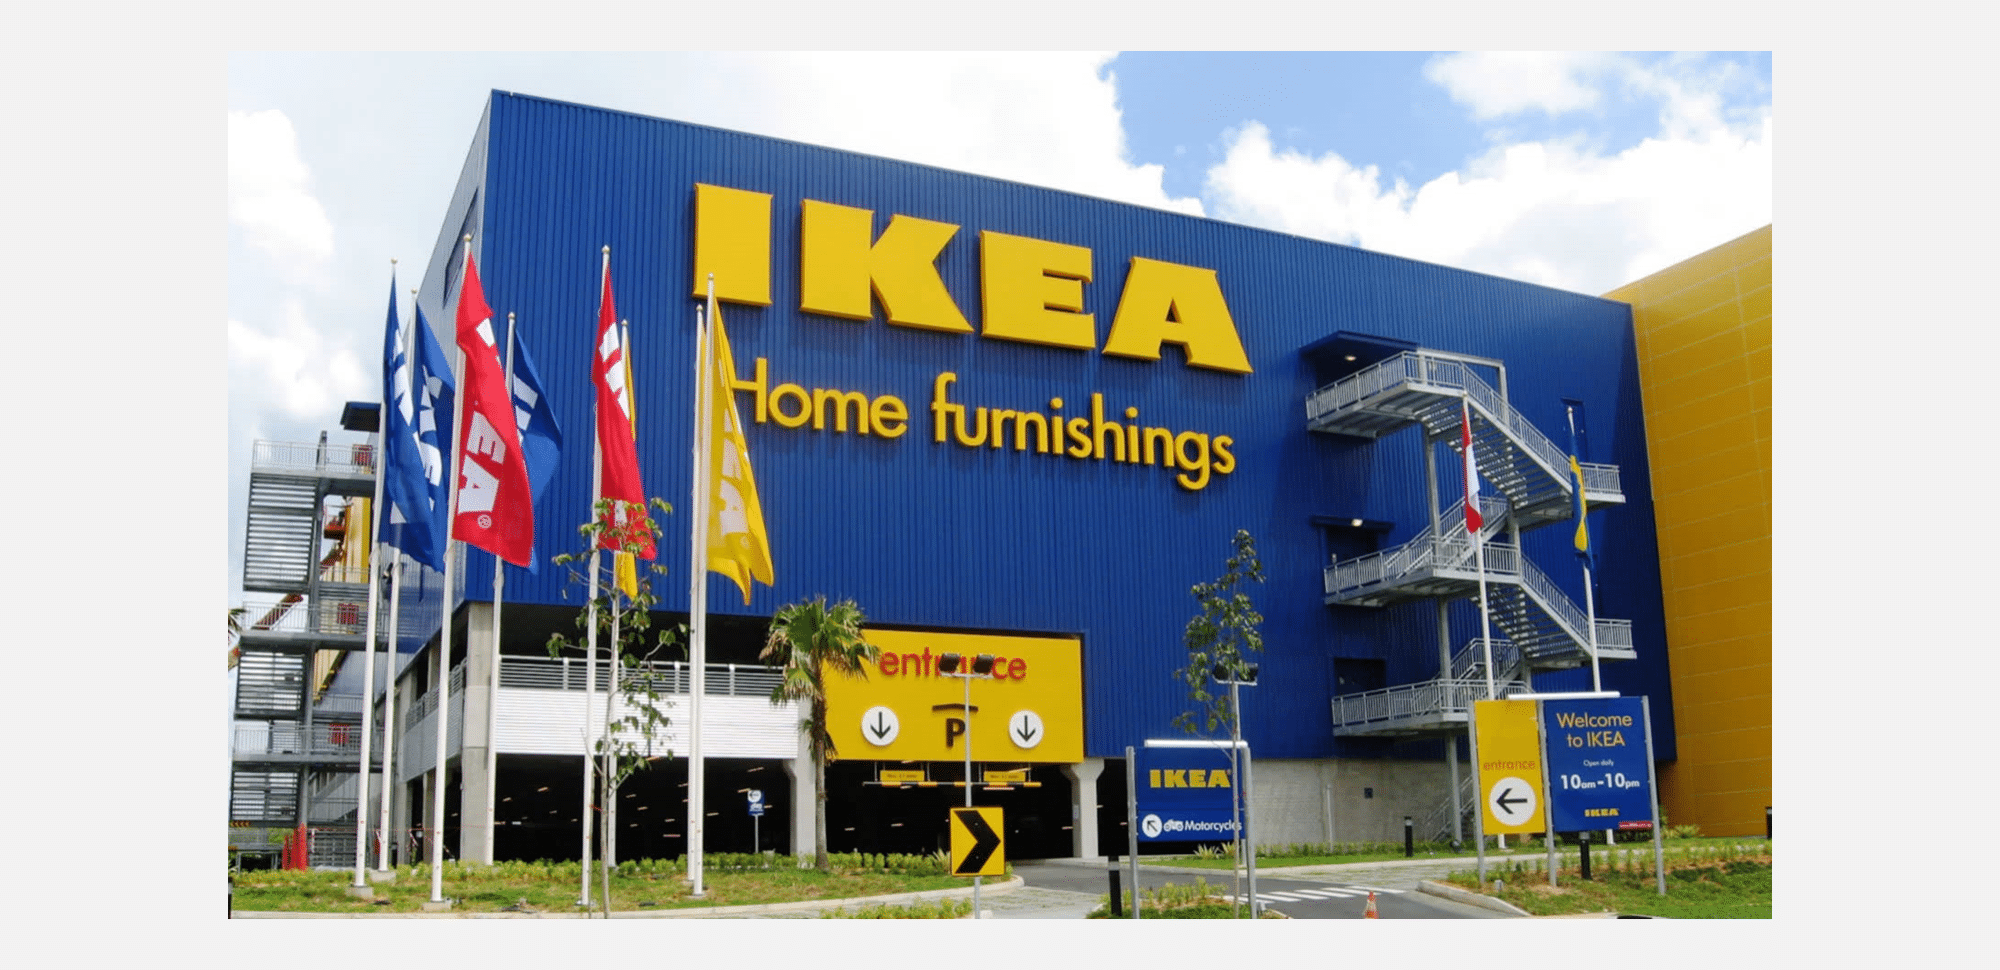 IKEA brand promise